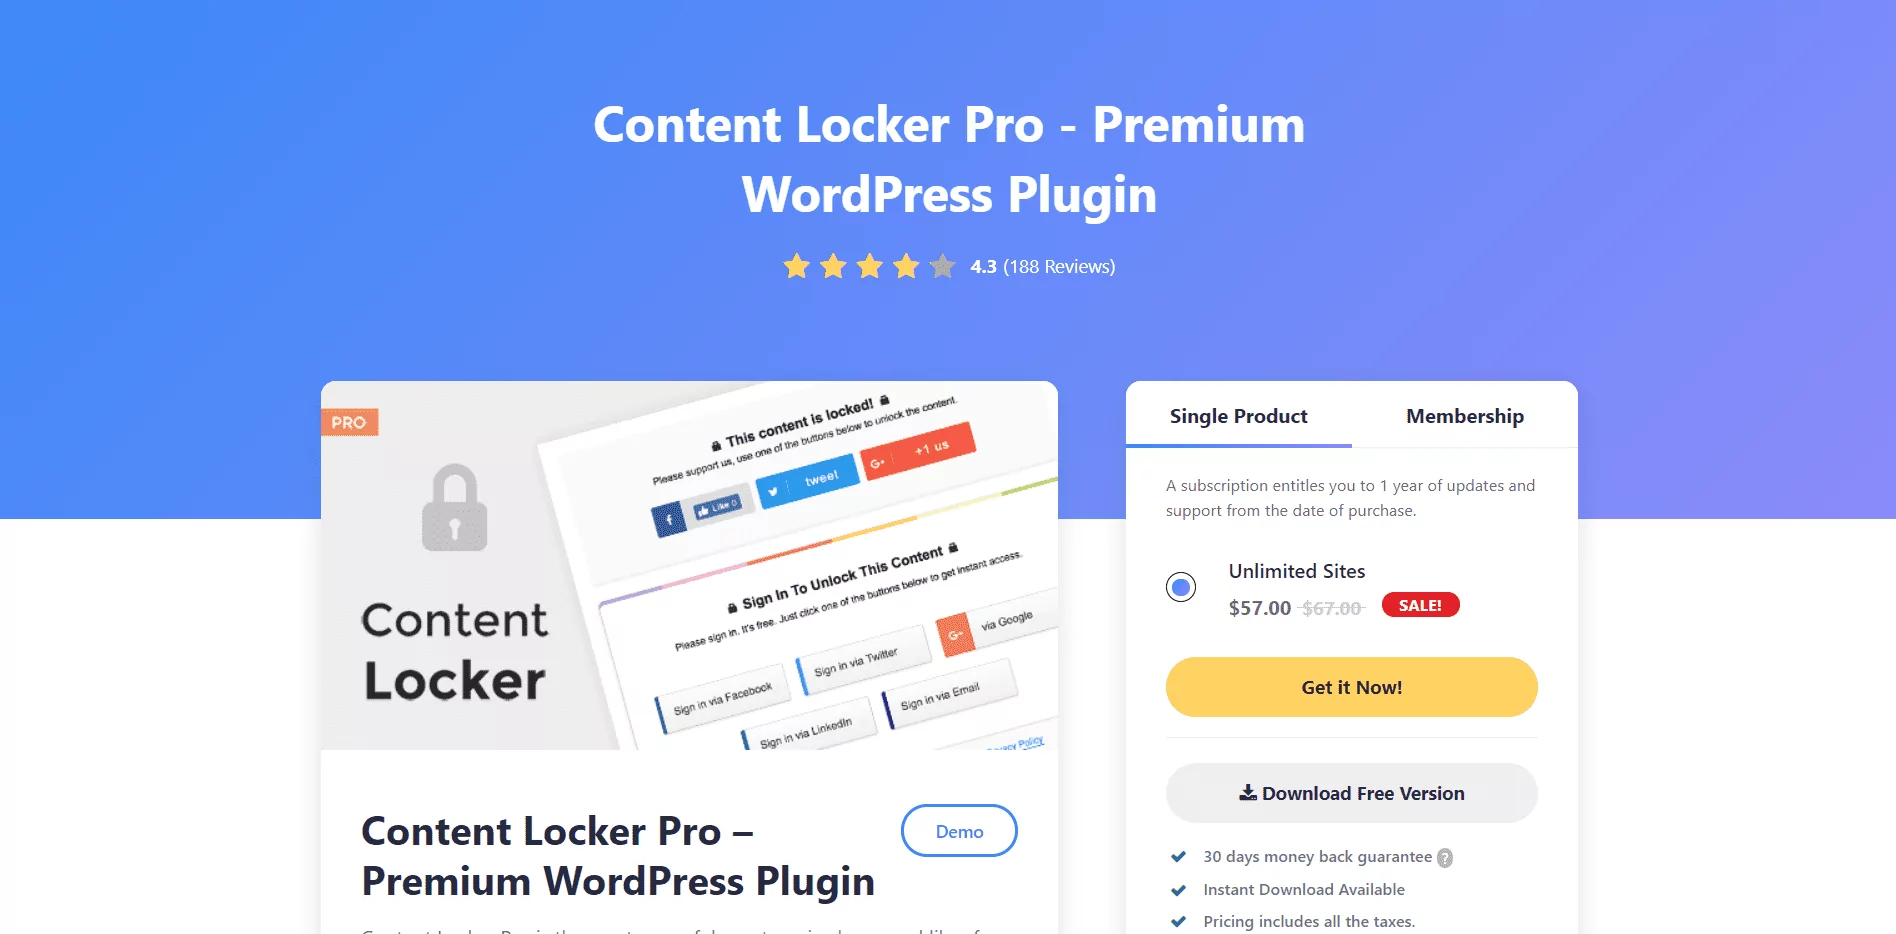 Content Locker Pro WordPress Plugin